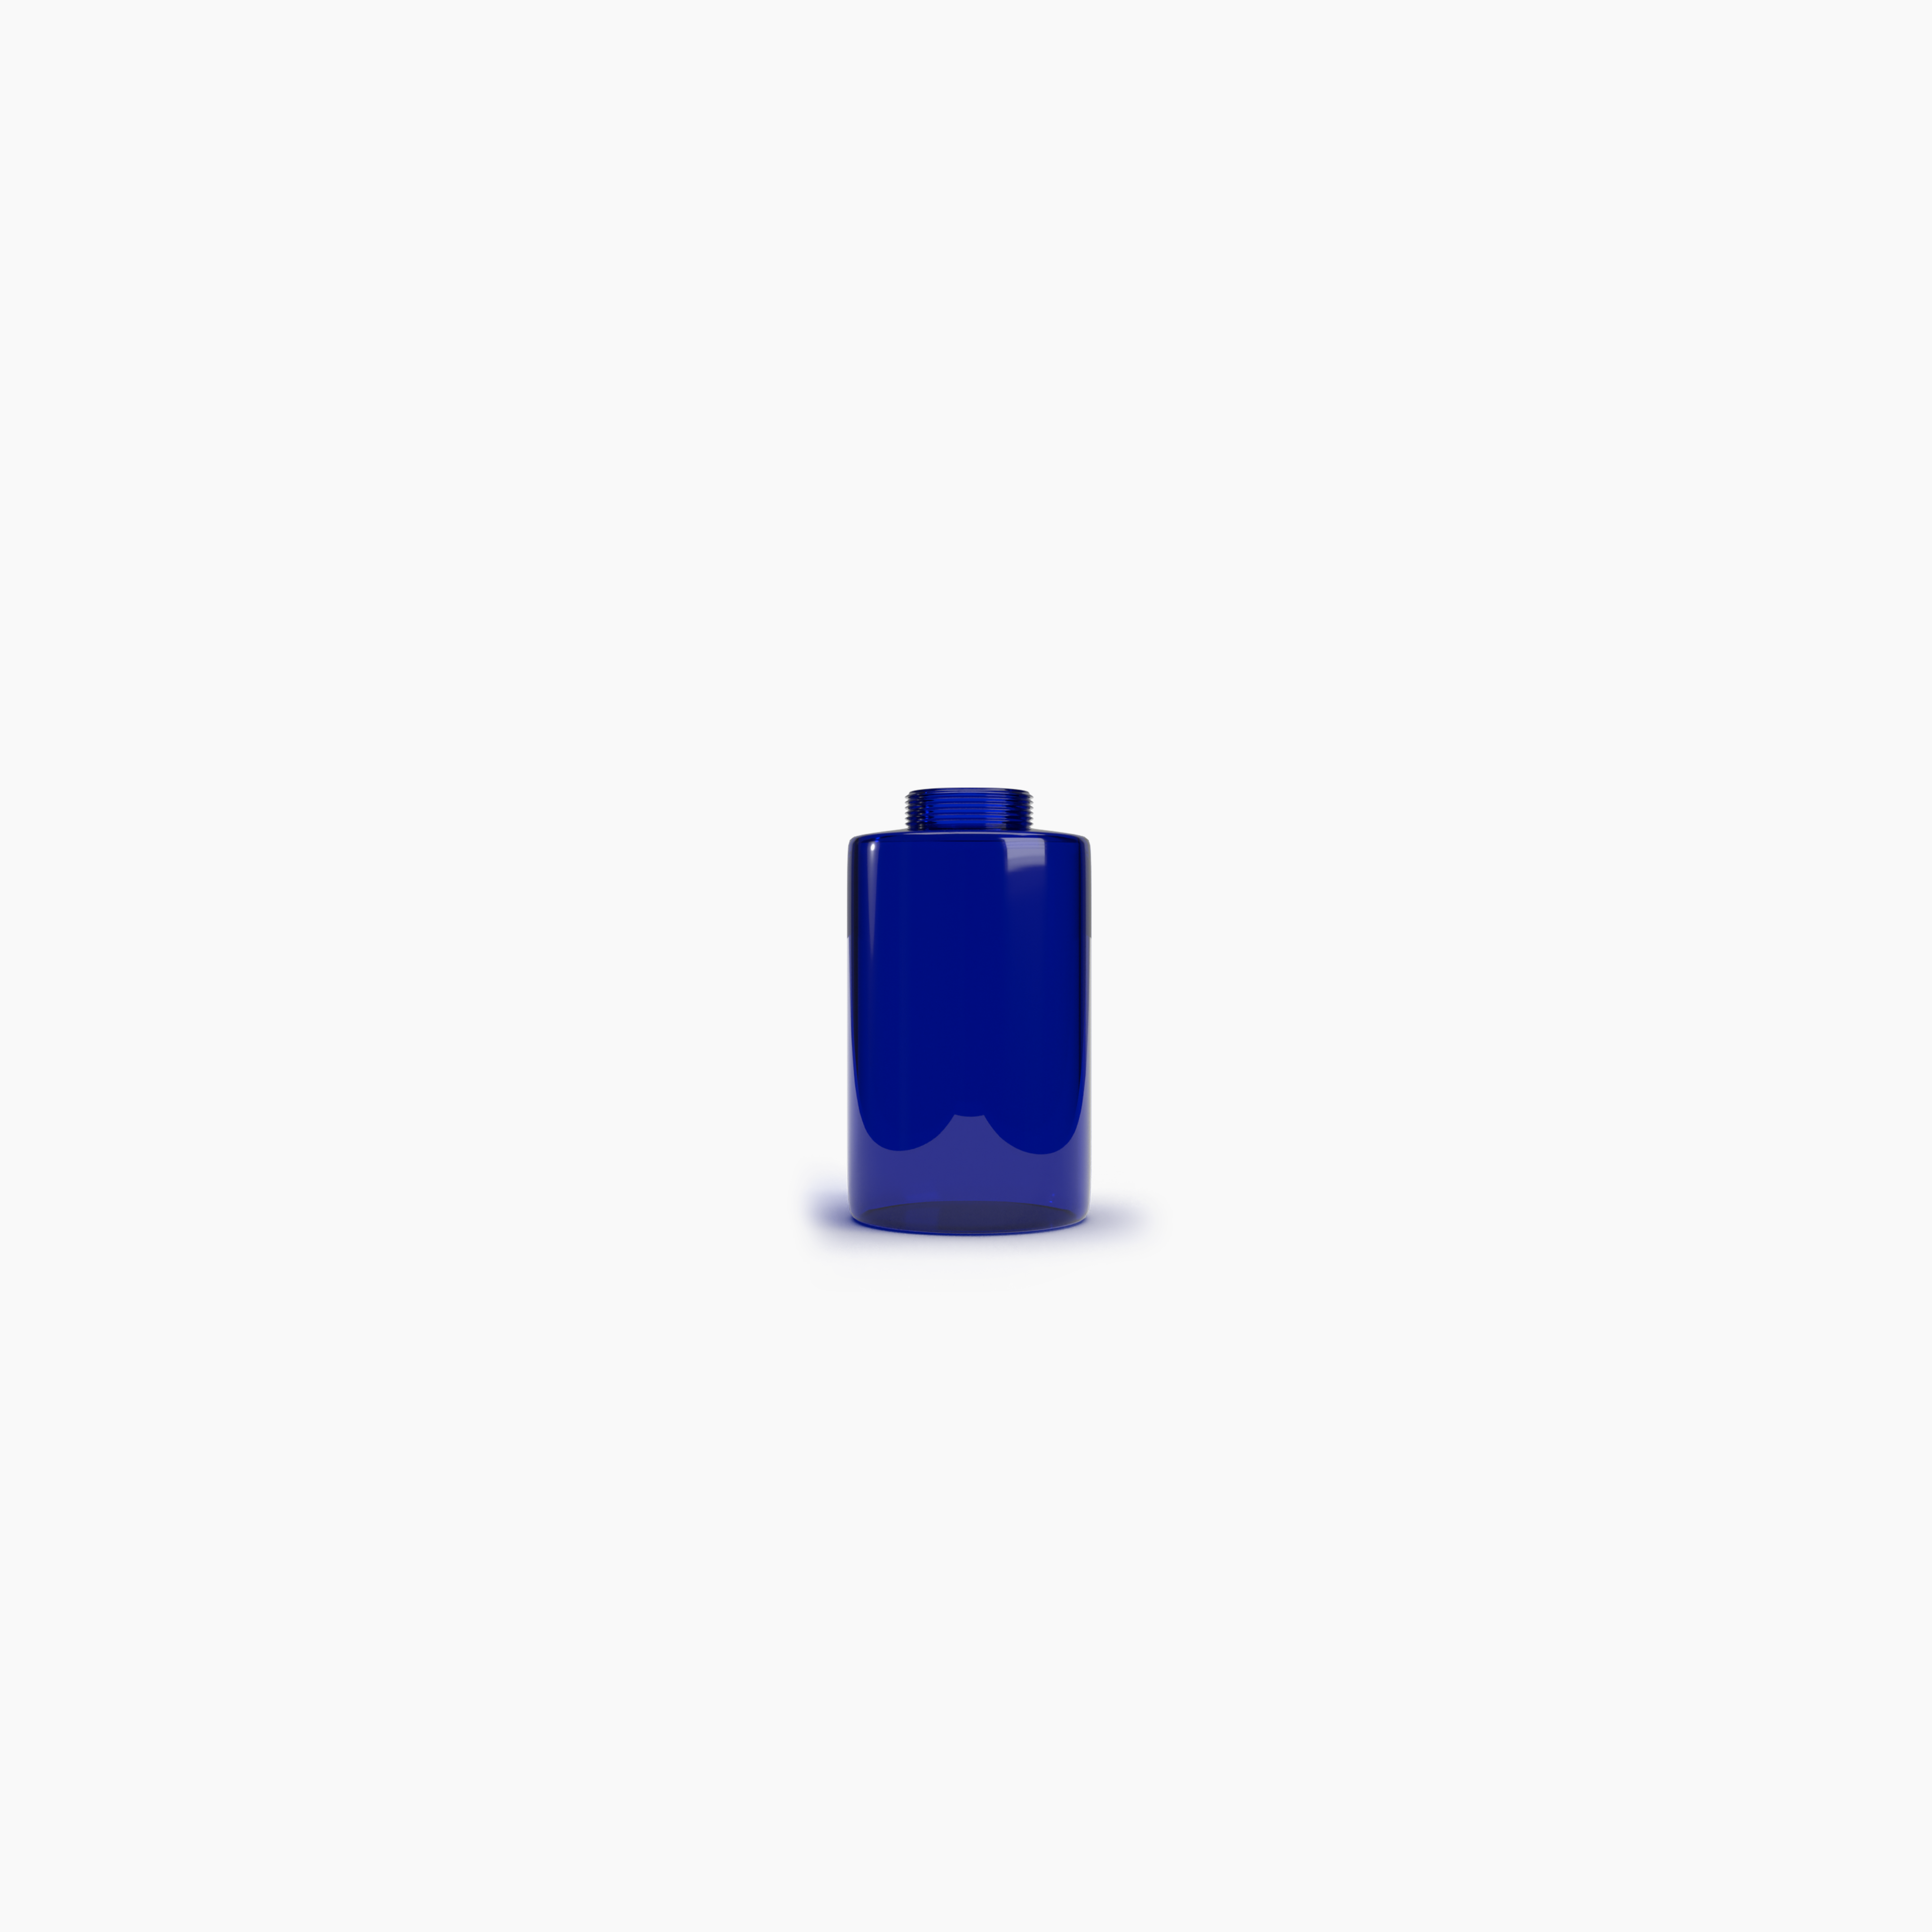 AT-600 Empty Blue Bottle